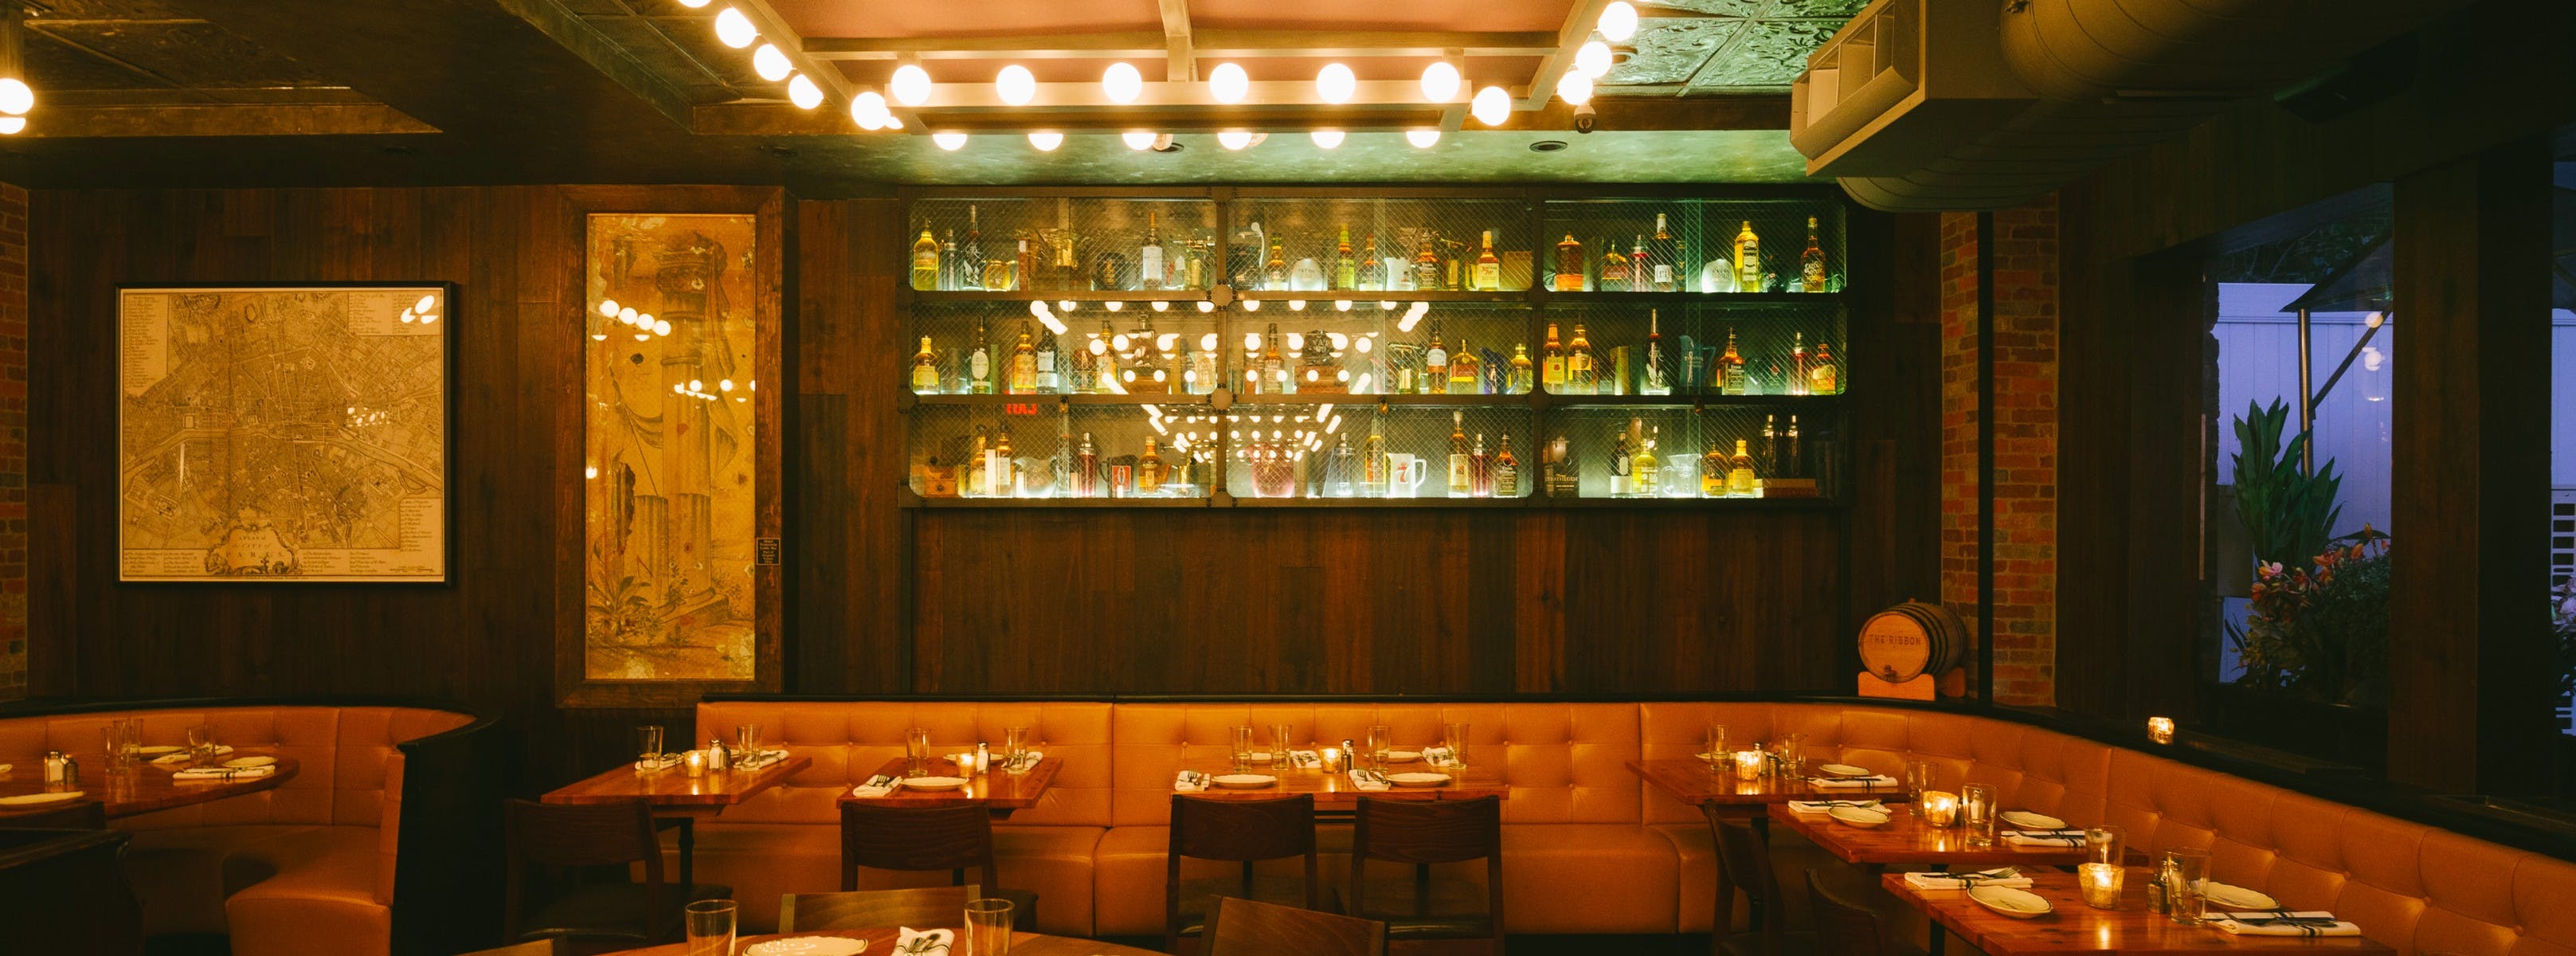 New York City's Blue Ribbon Brasserie Opens a Boston Outpost - Eater Boston